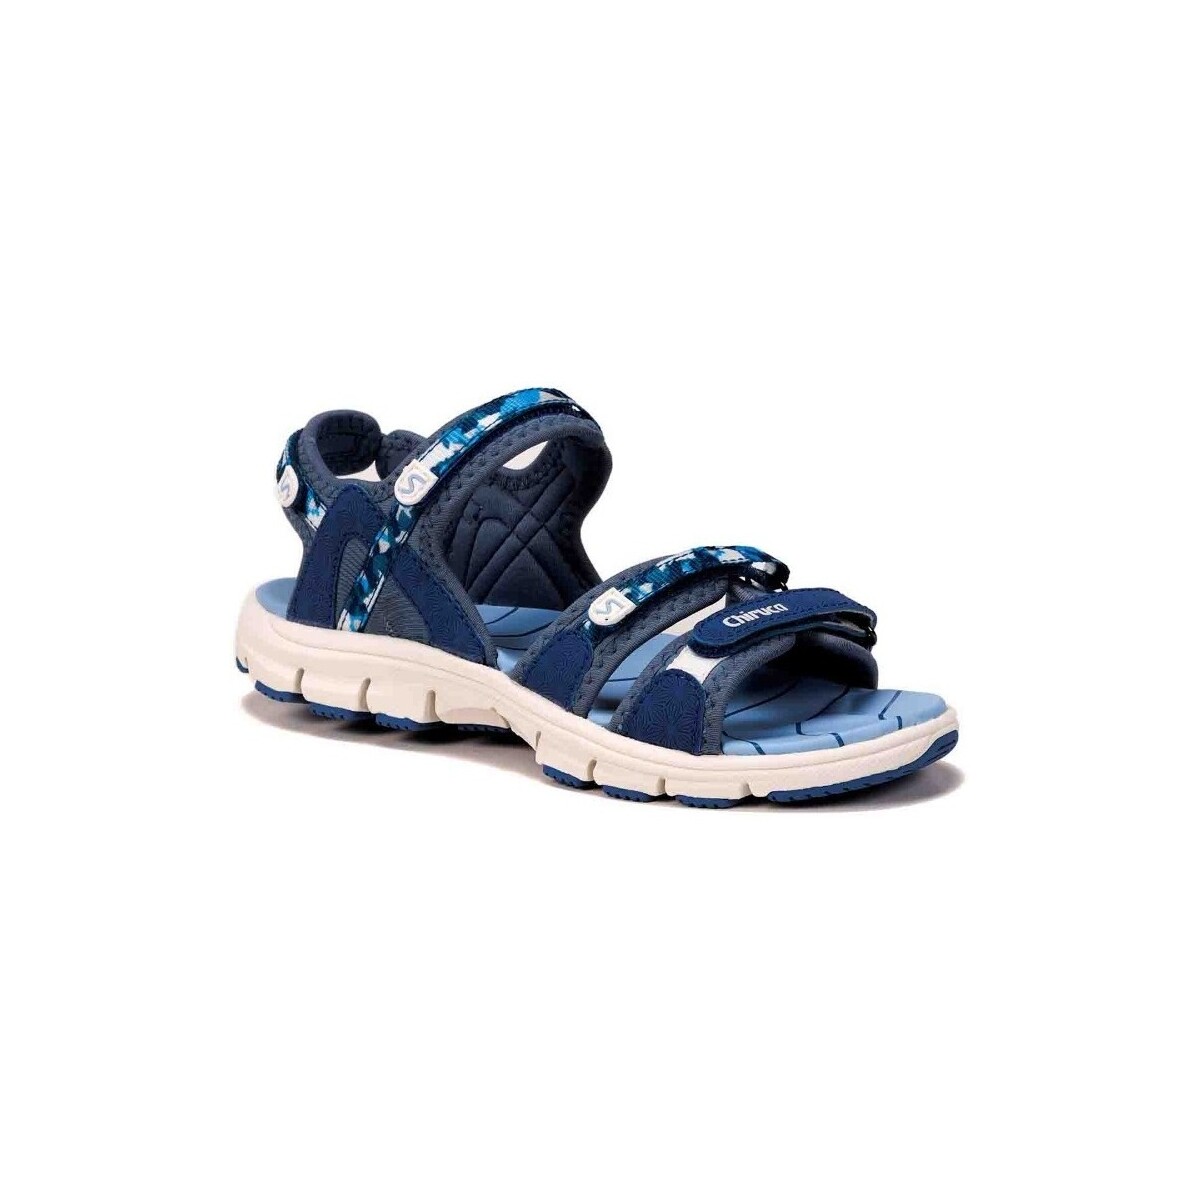 Schuhe Damen Sportliche Sandalen Chiruca YAIZA 03 Blau